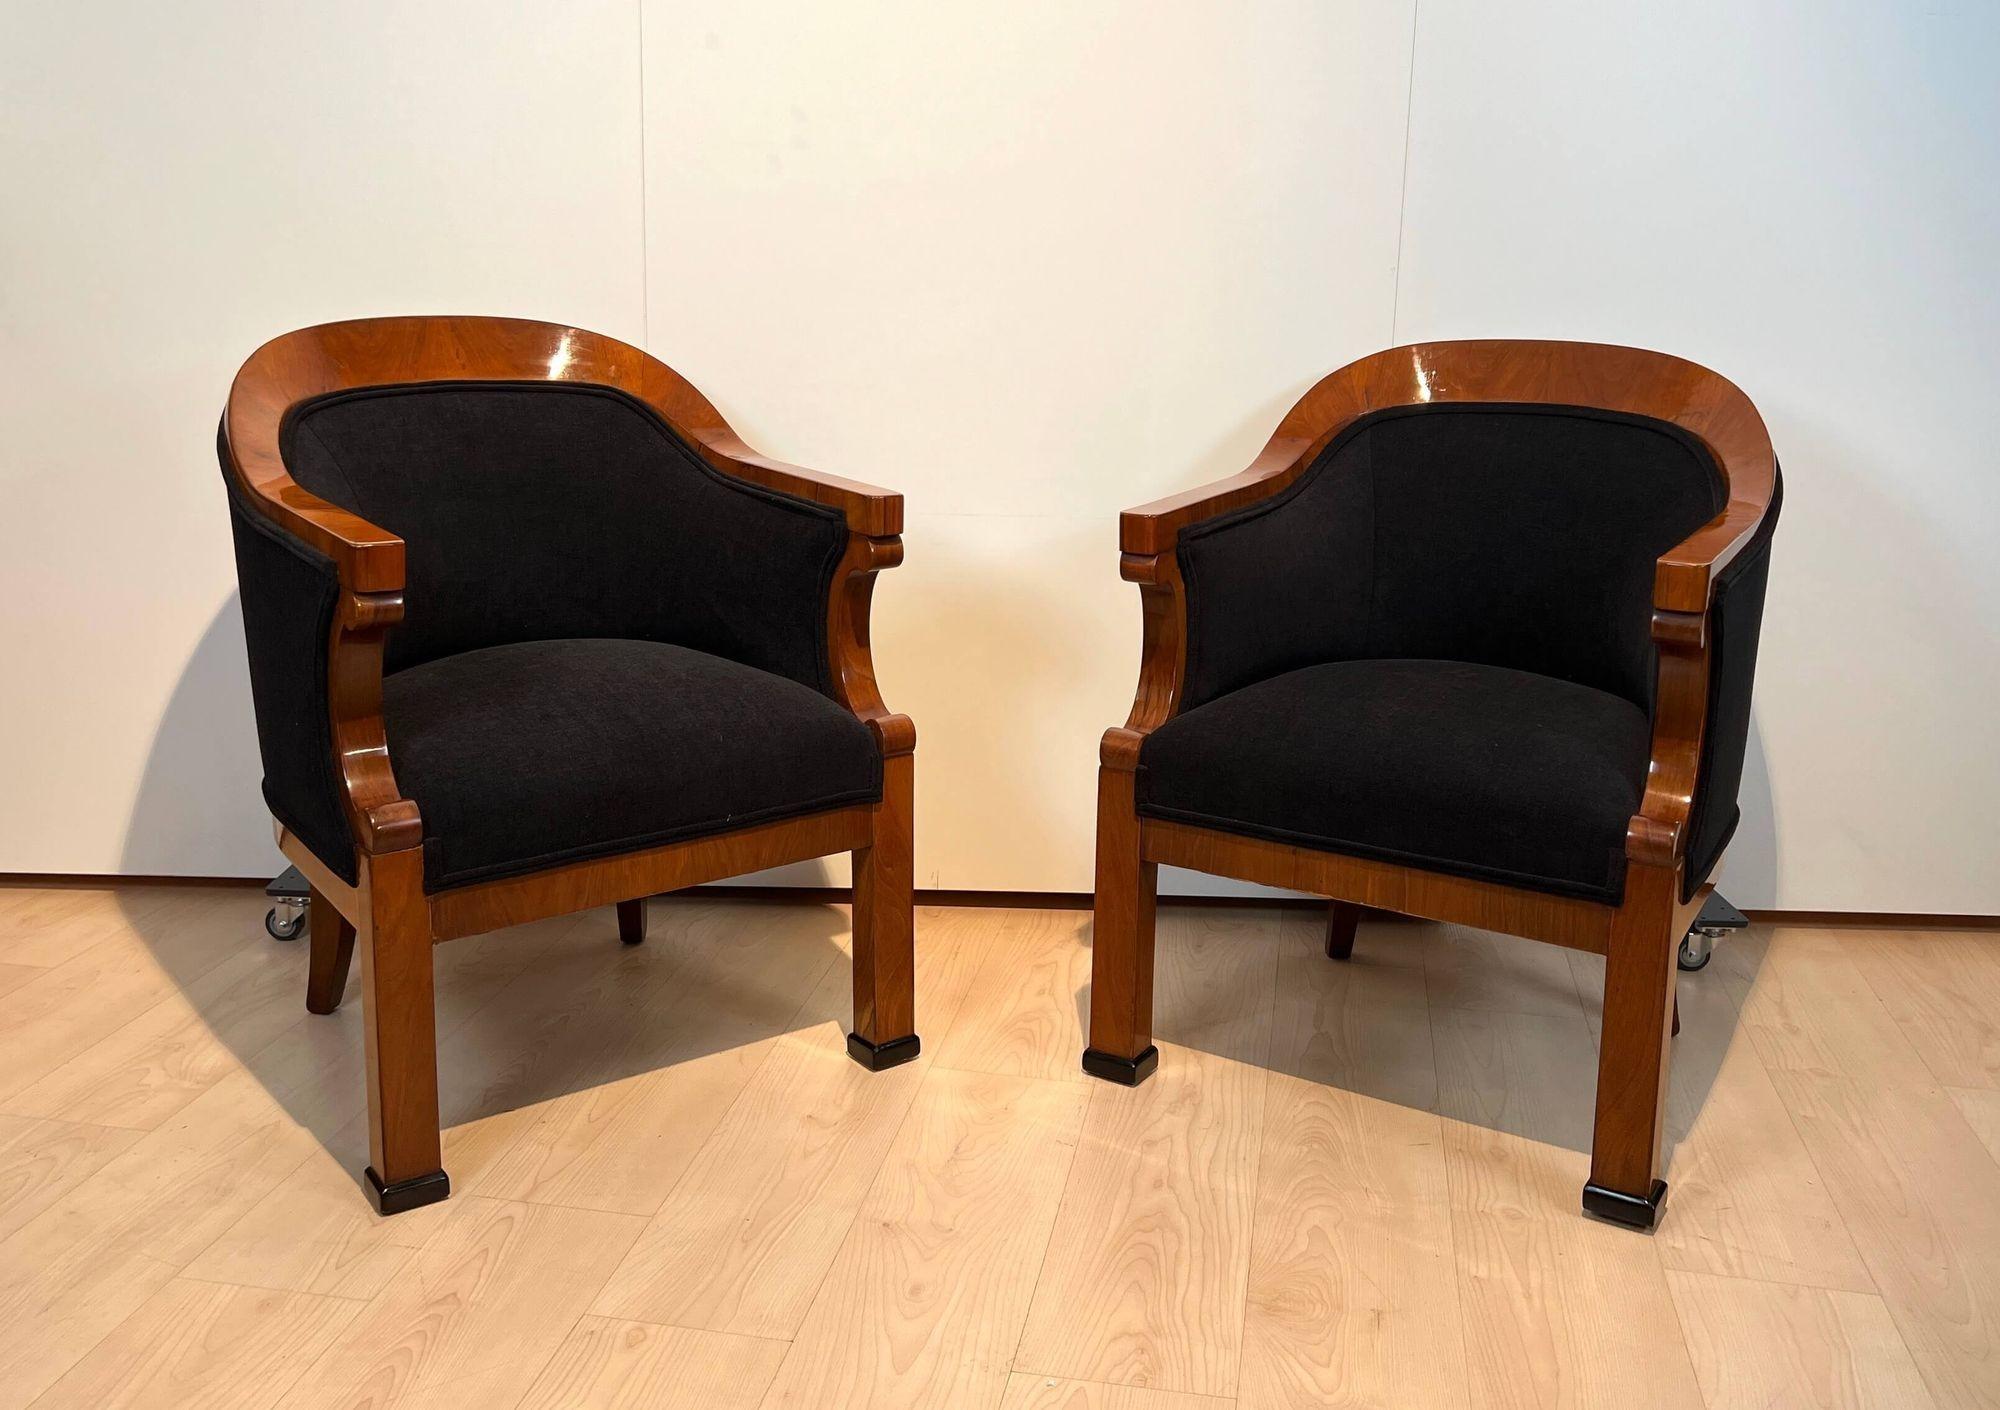 Austrian Pair of Biedermeier Bergere Chairs, Walnut Veneer, Vienna/Austria, 19th Century